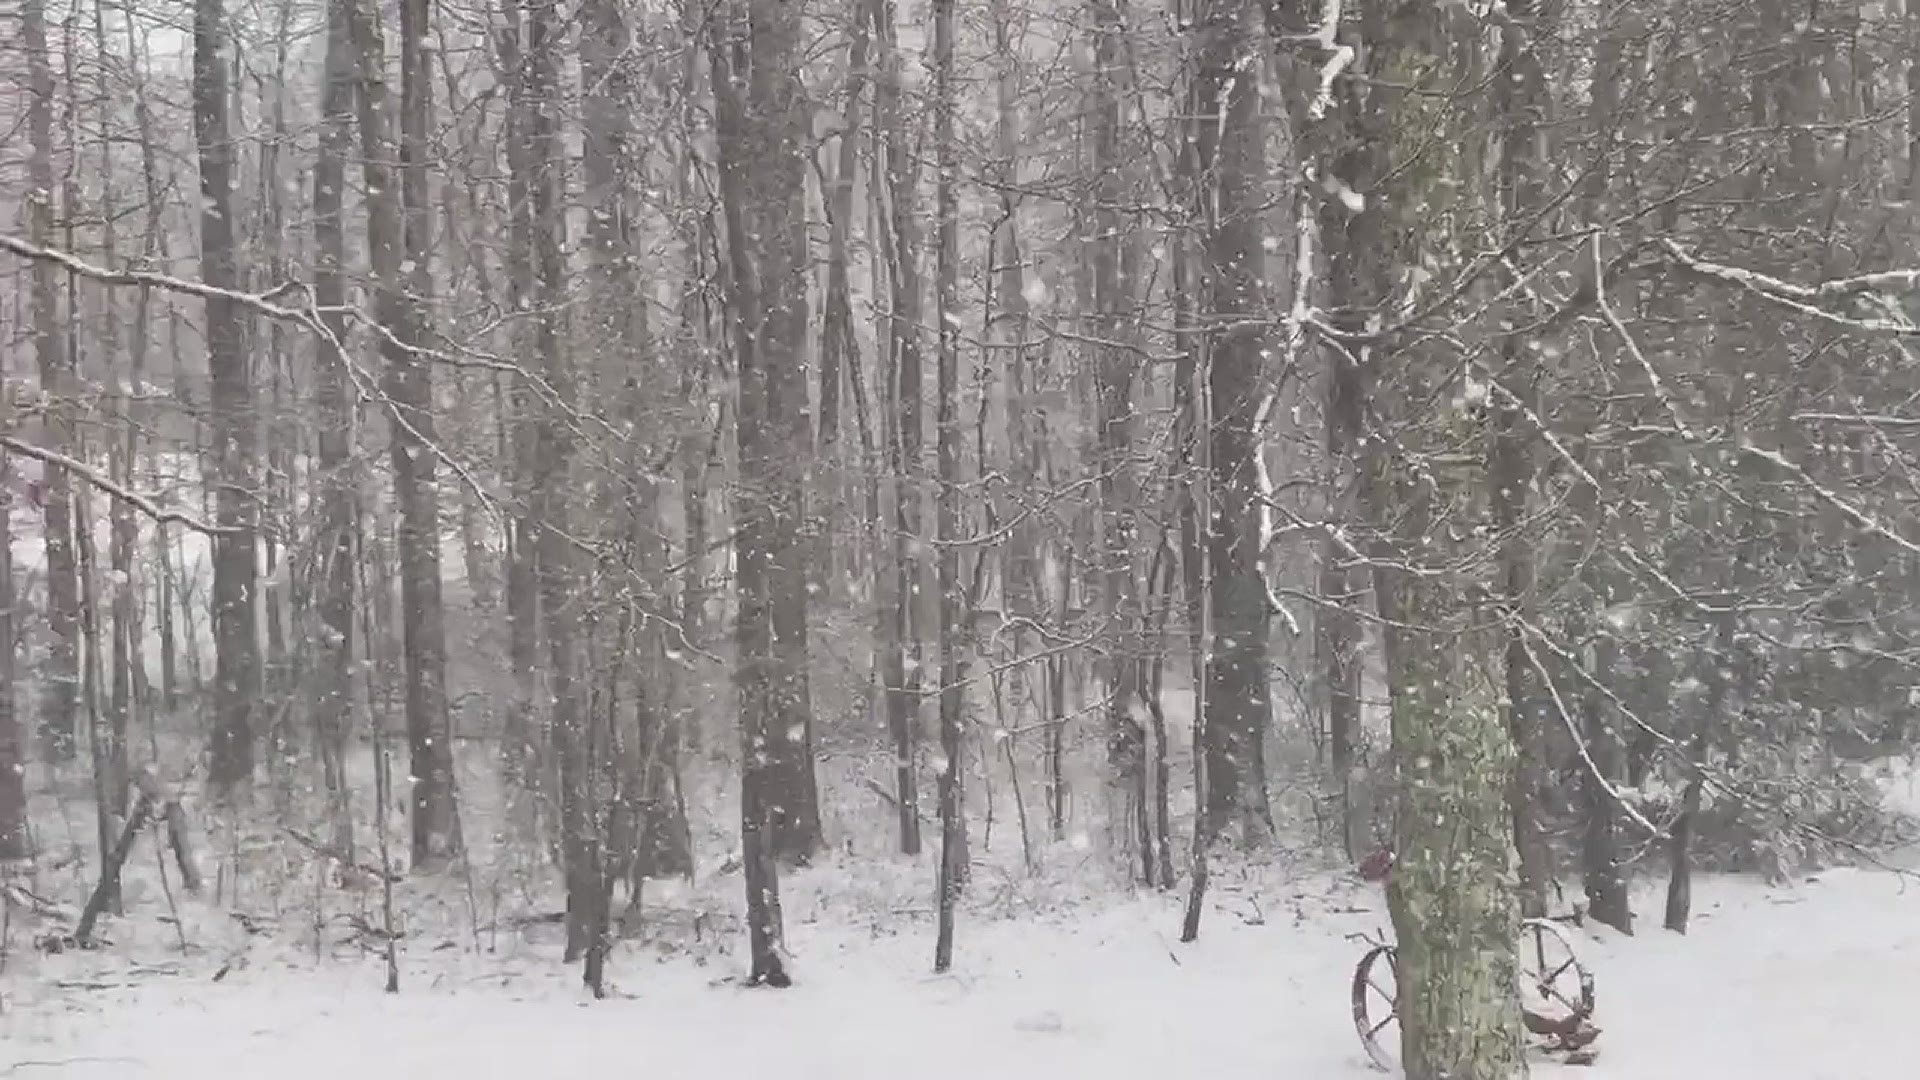 Snow falling in Oneida, Tennessee, on Feb. 16, 2021.
Credit: Tonja Burk